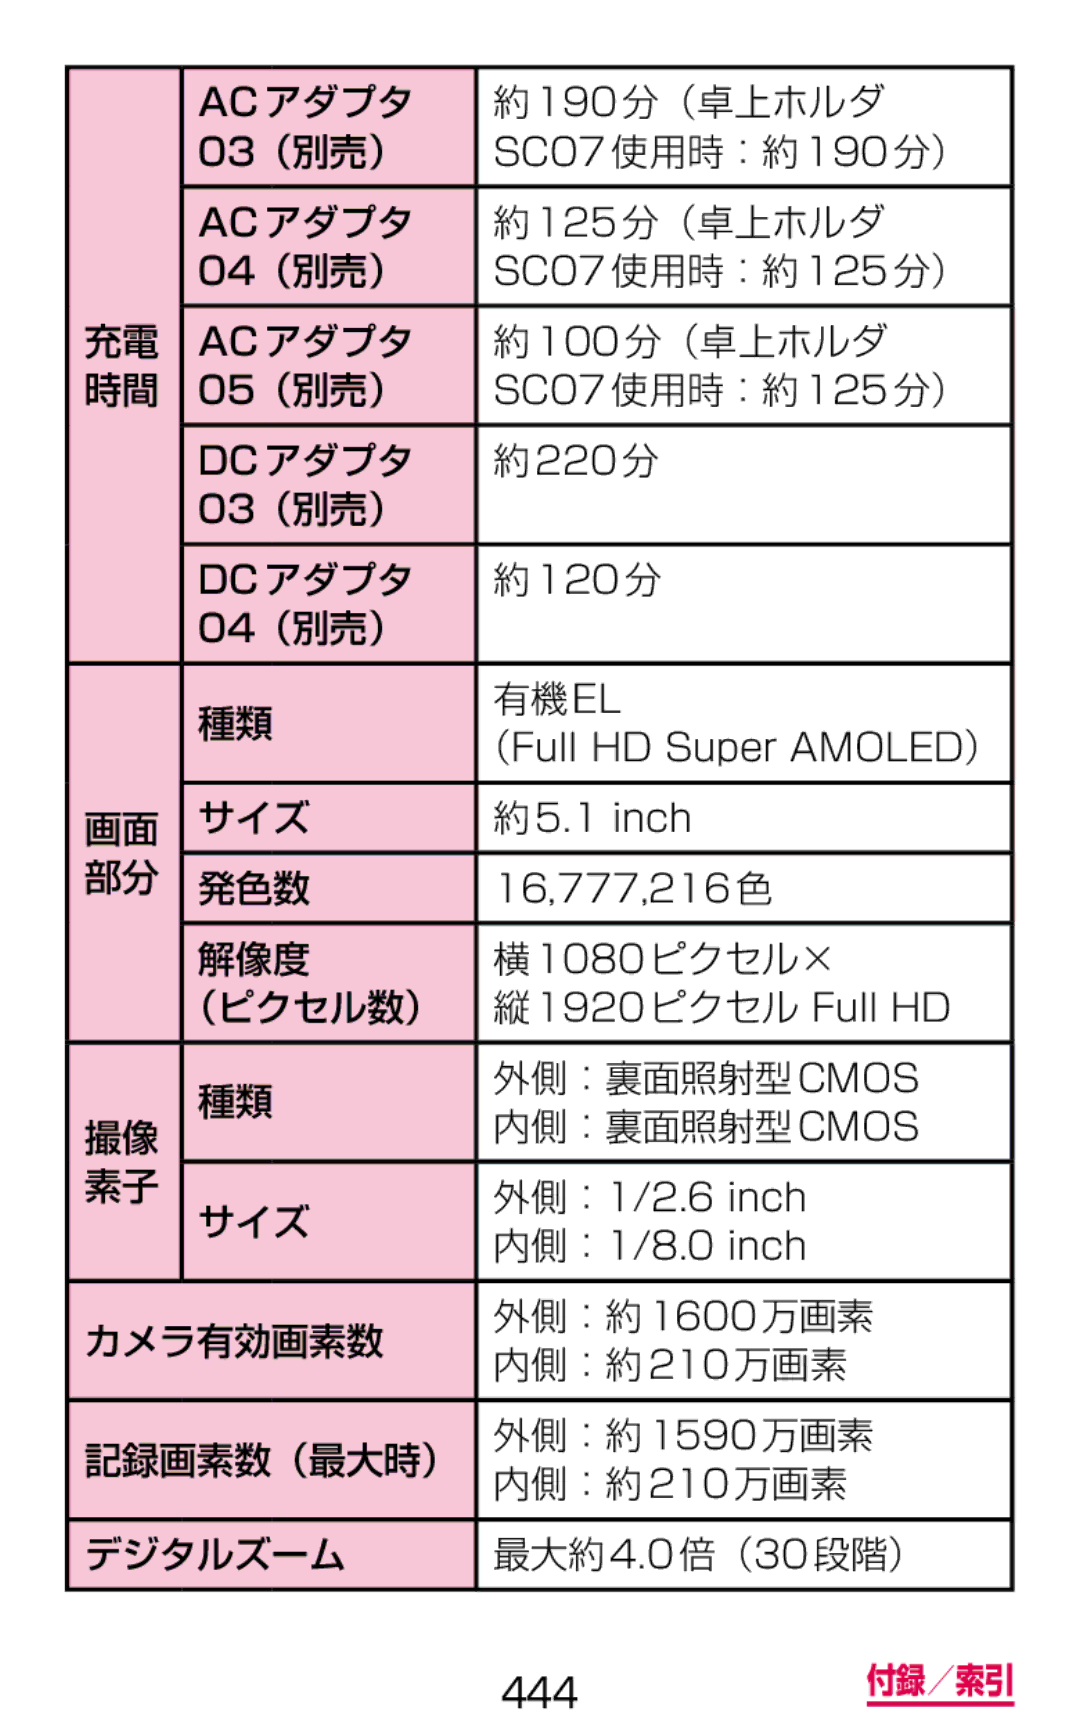 Samsung SM-G900DZKEDCM ACアダプタ 190分（卓上ホルダ 03（別売）, ACアダプタ 125分（卓上ホルダ 04（別売）, ACアダプタ 100 分（卓上ホルダ 05（別売）, DCアダプタ 220分 03（別売） 